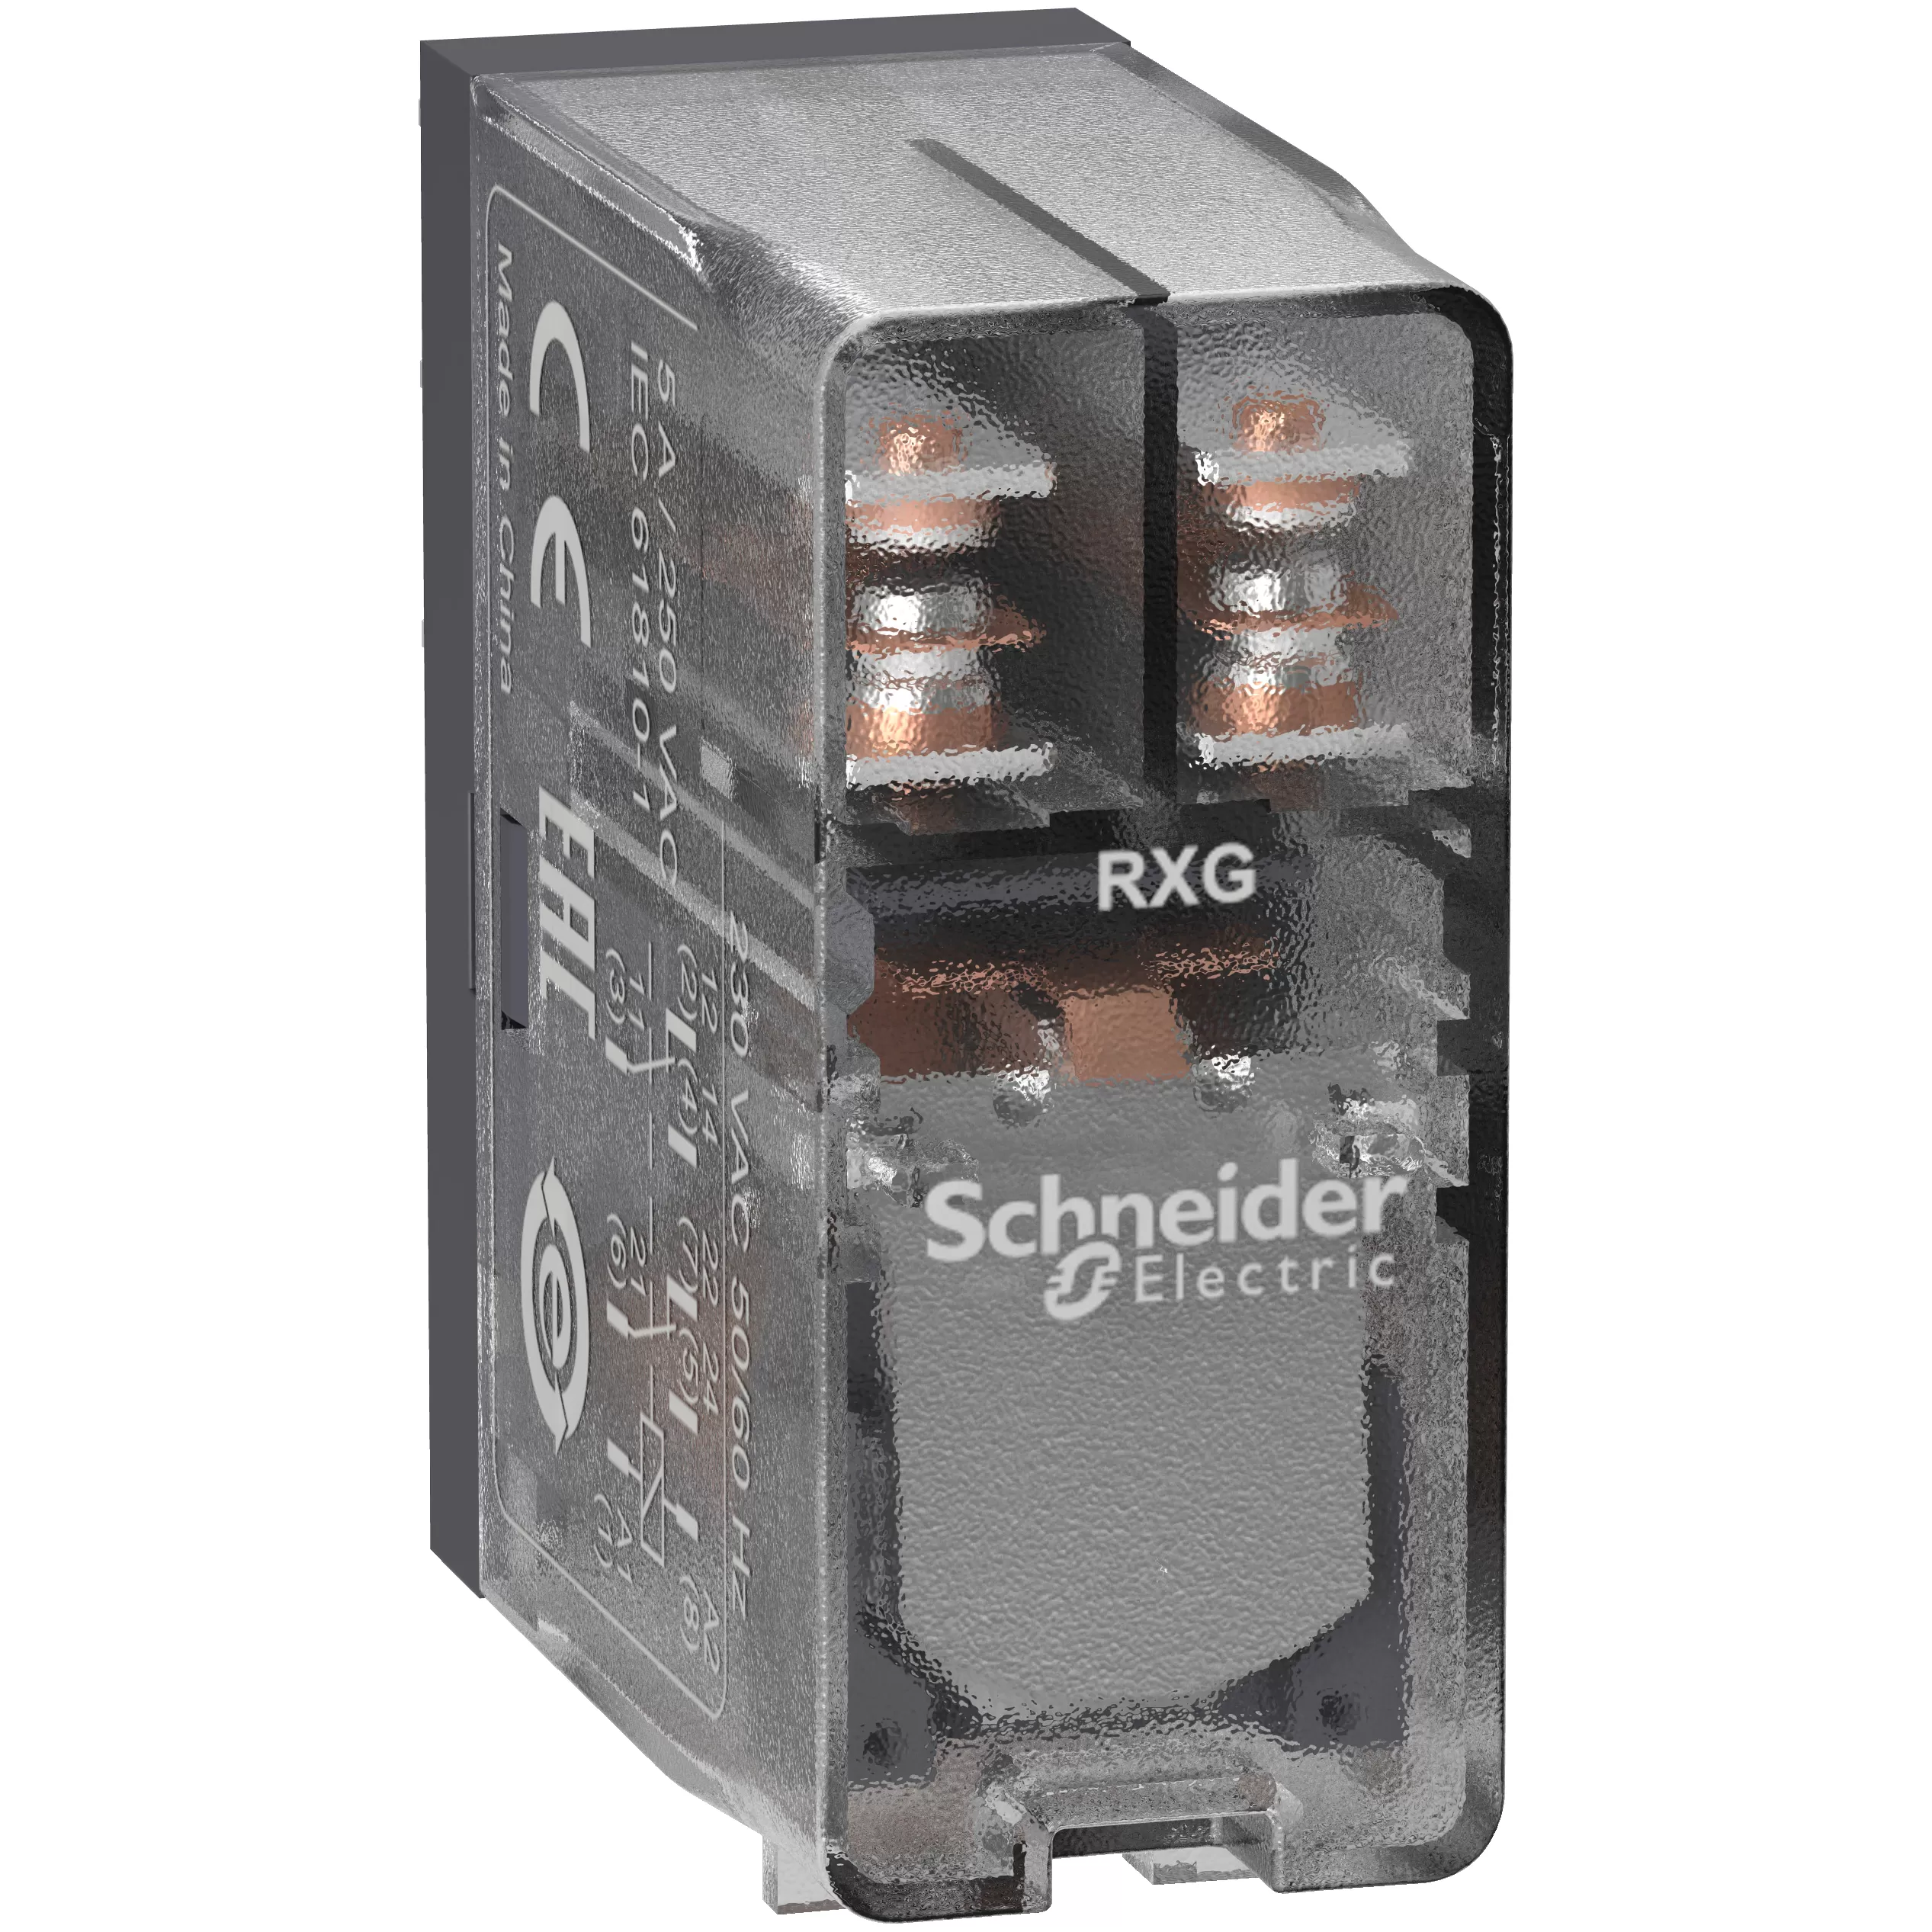 Schneider Electric Steckb. Interface-Relais RXG, 2 W, 5 A, 230VAC, Klarsichtgehäuse RXG25P7